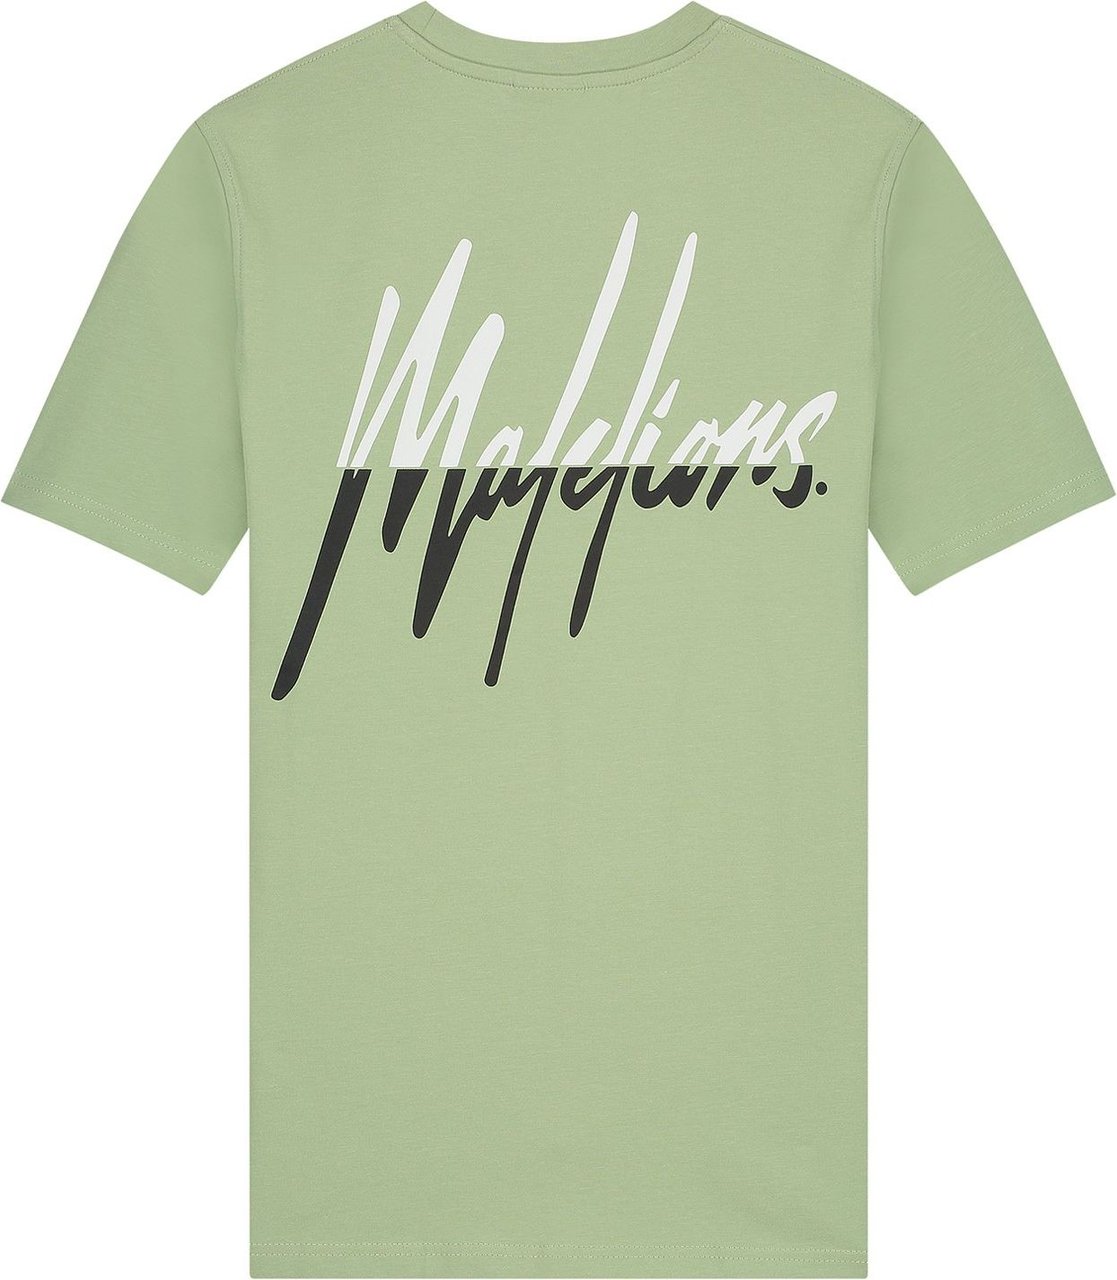 Malelions Women Kiki T-Shirt - Sage Green Groen